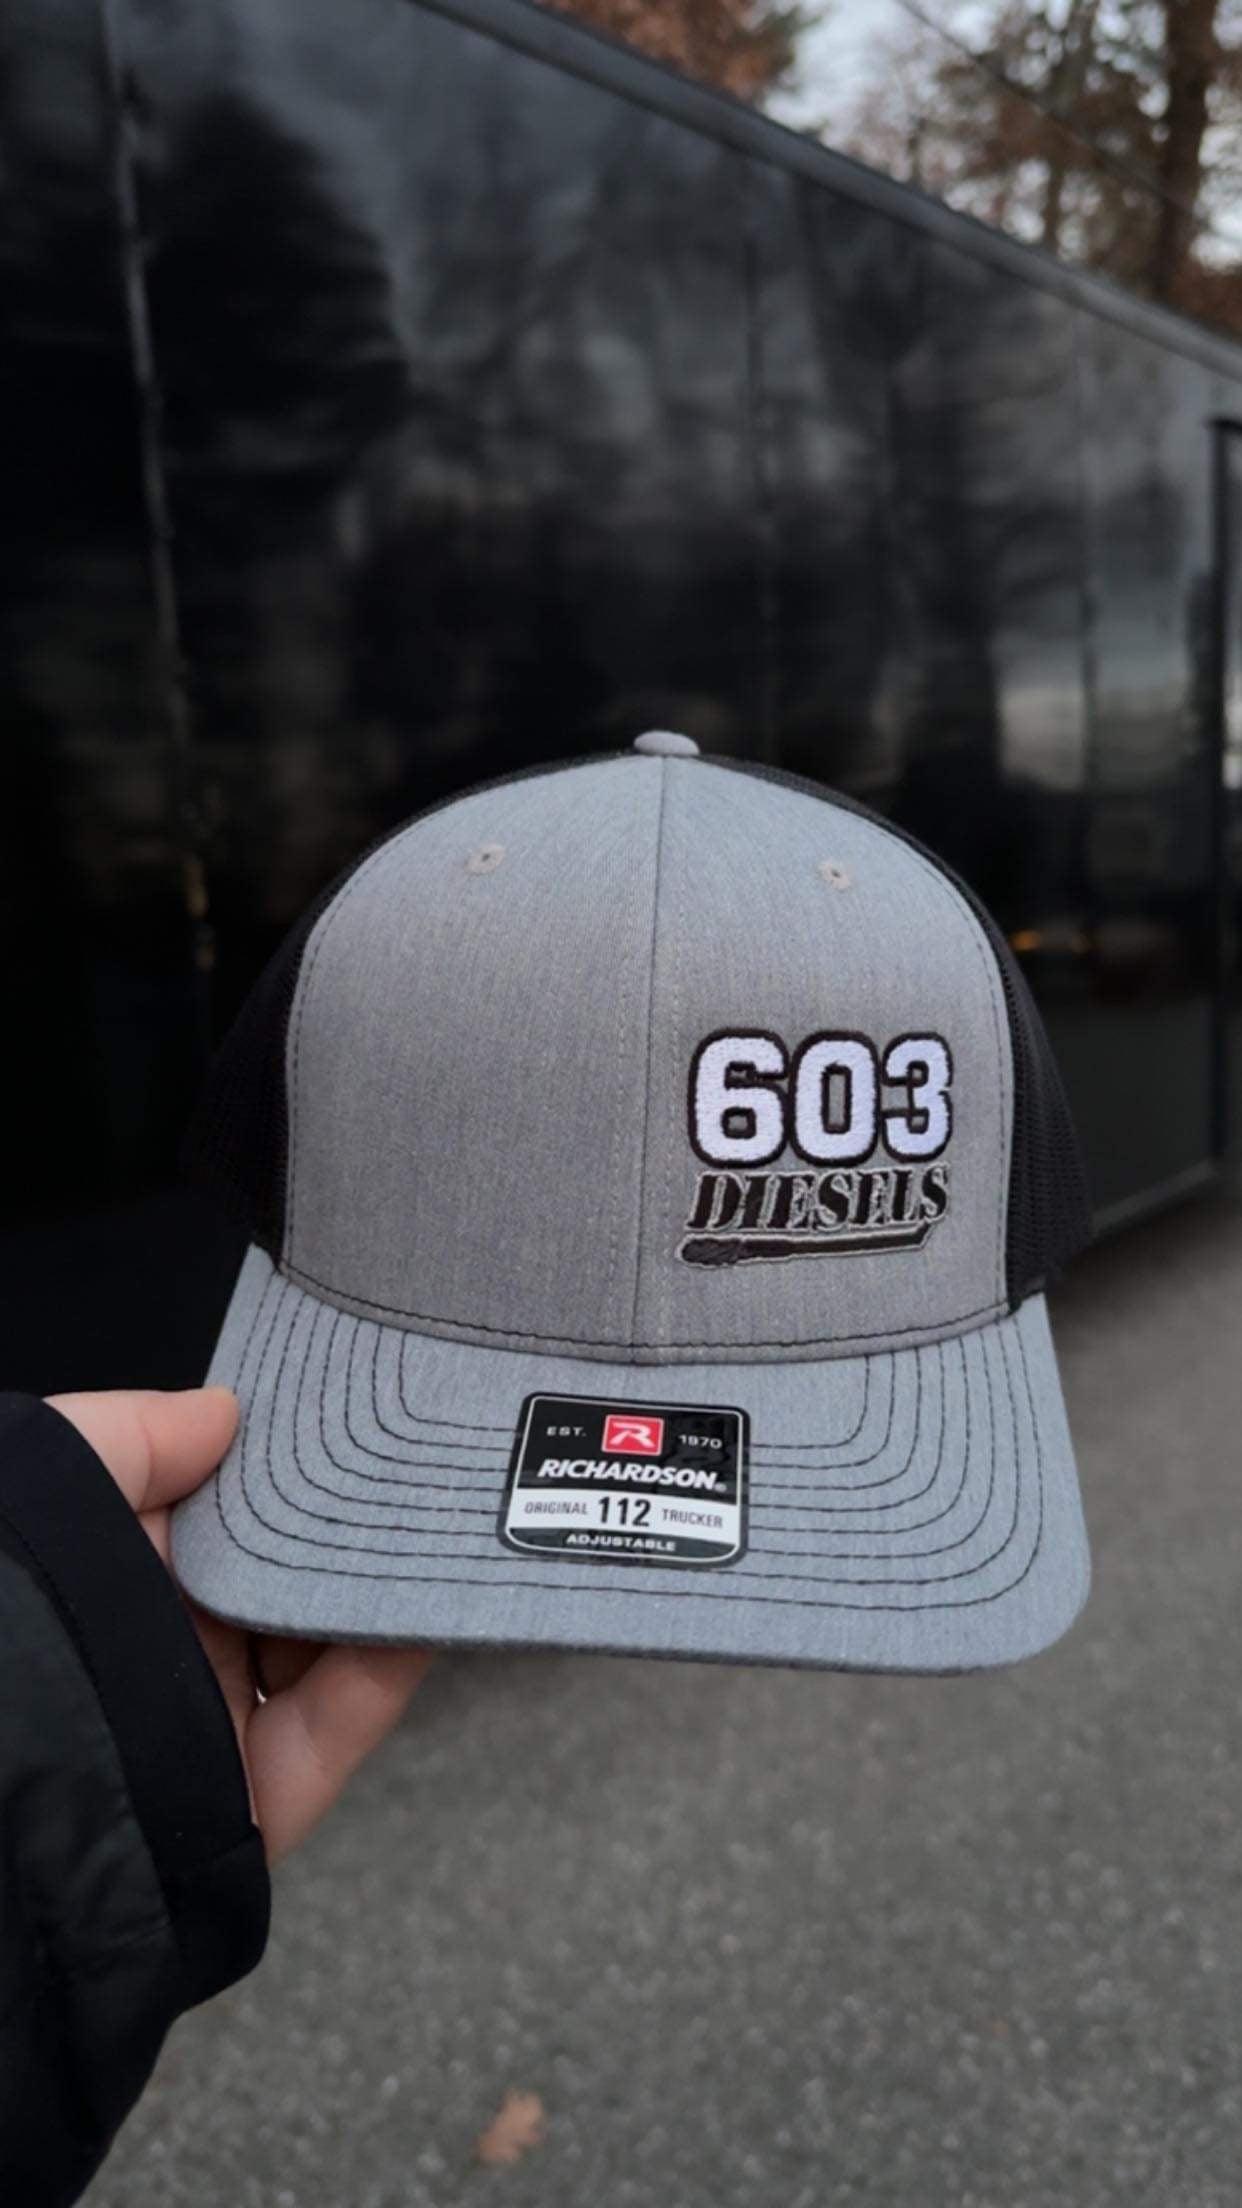 603 Diesels Logo Embroidered Hat